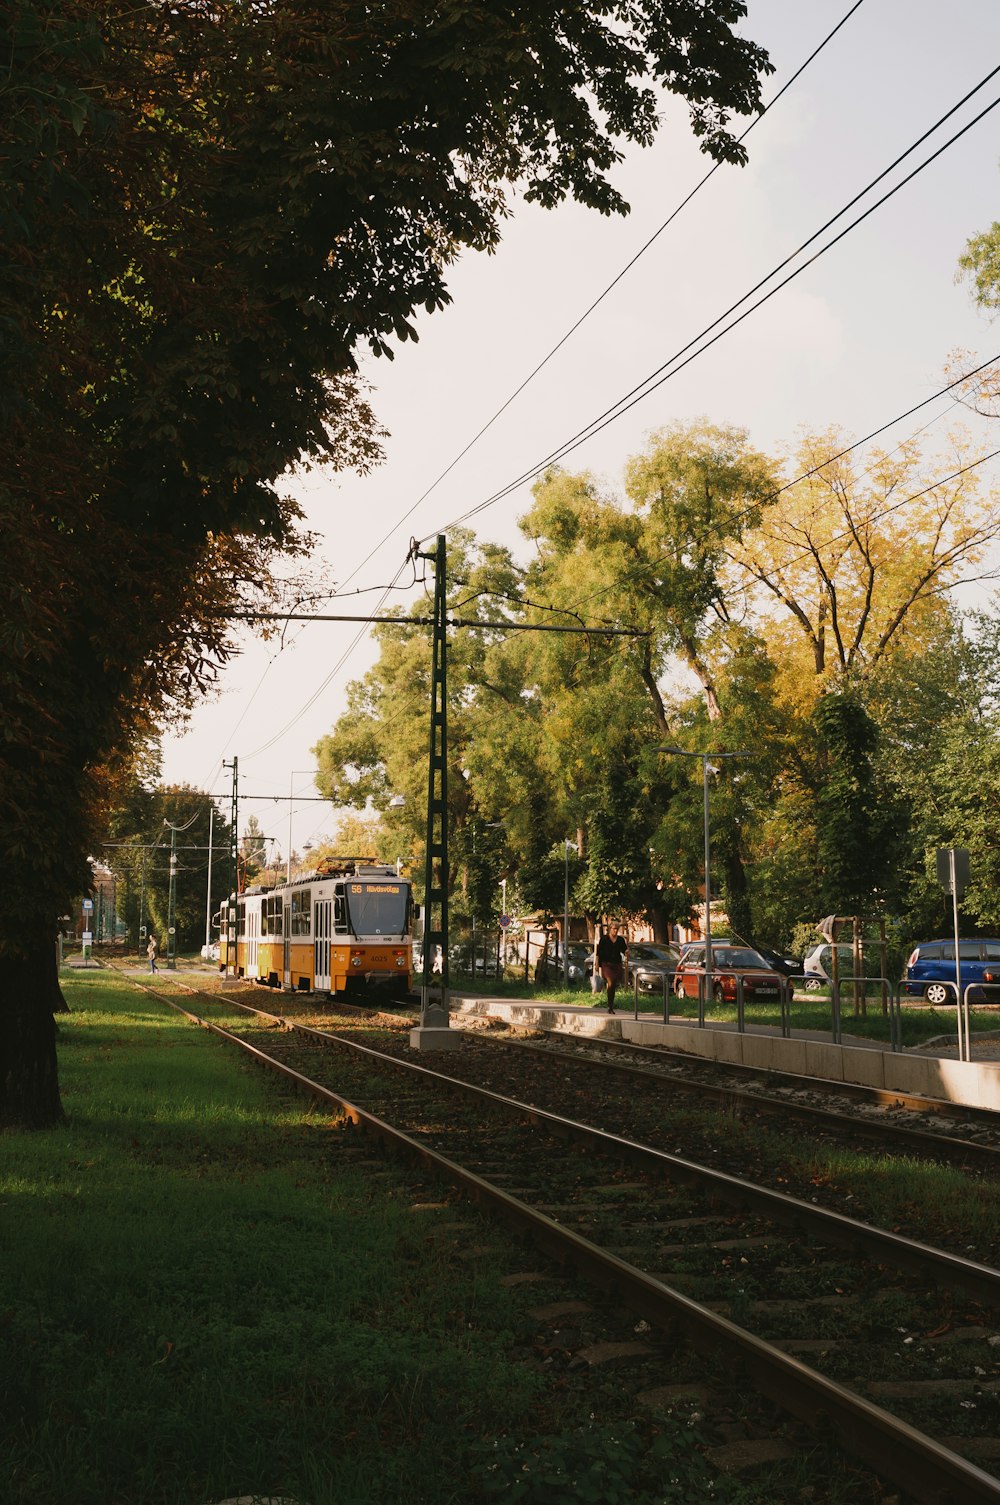 a train on the railway tracks